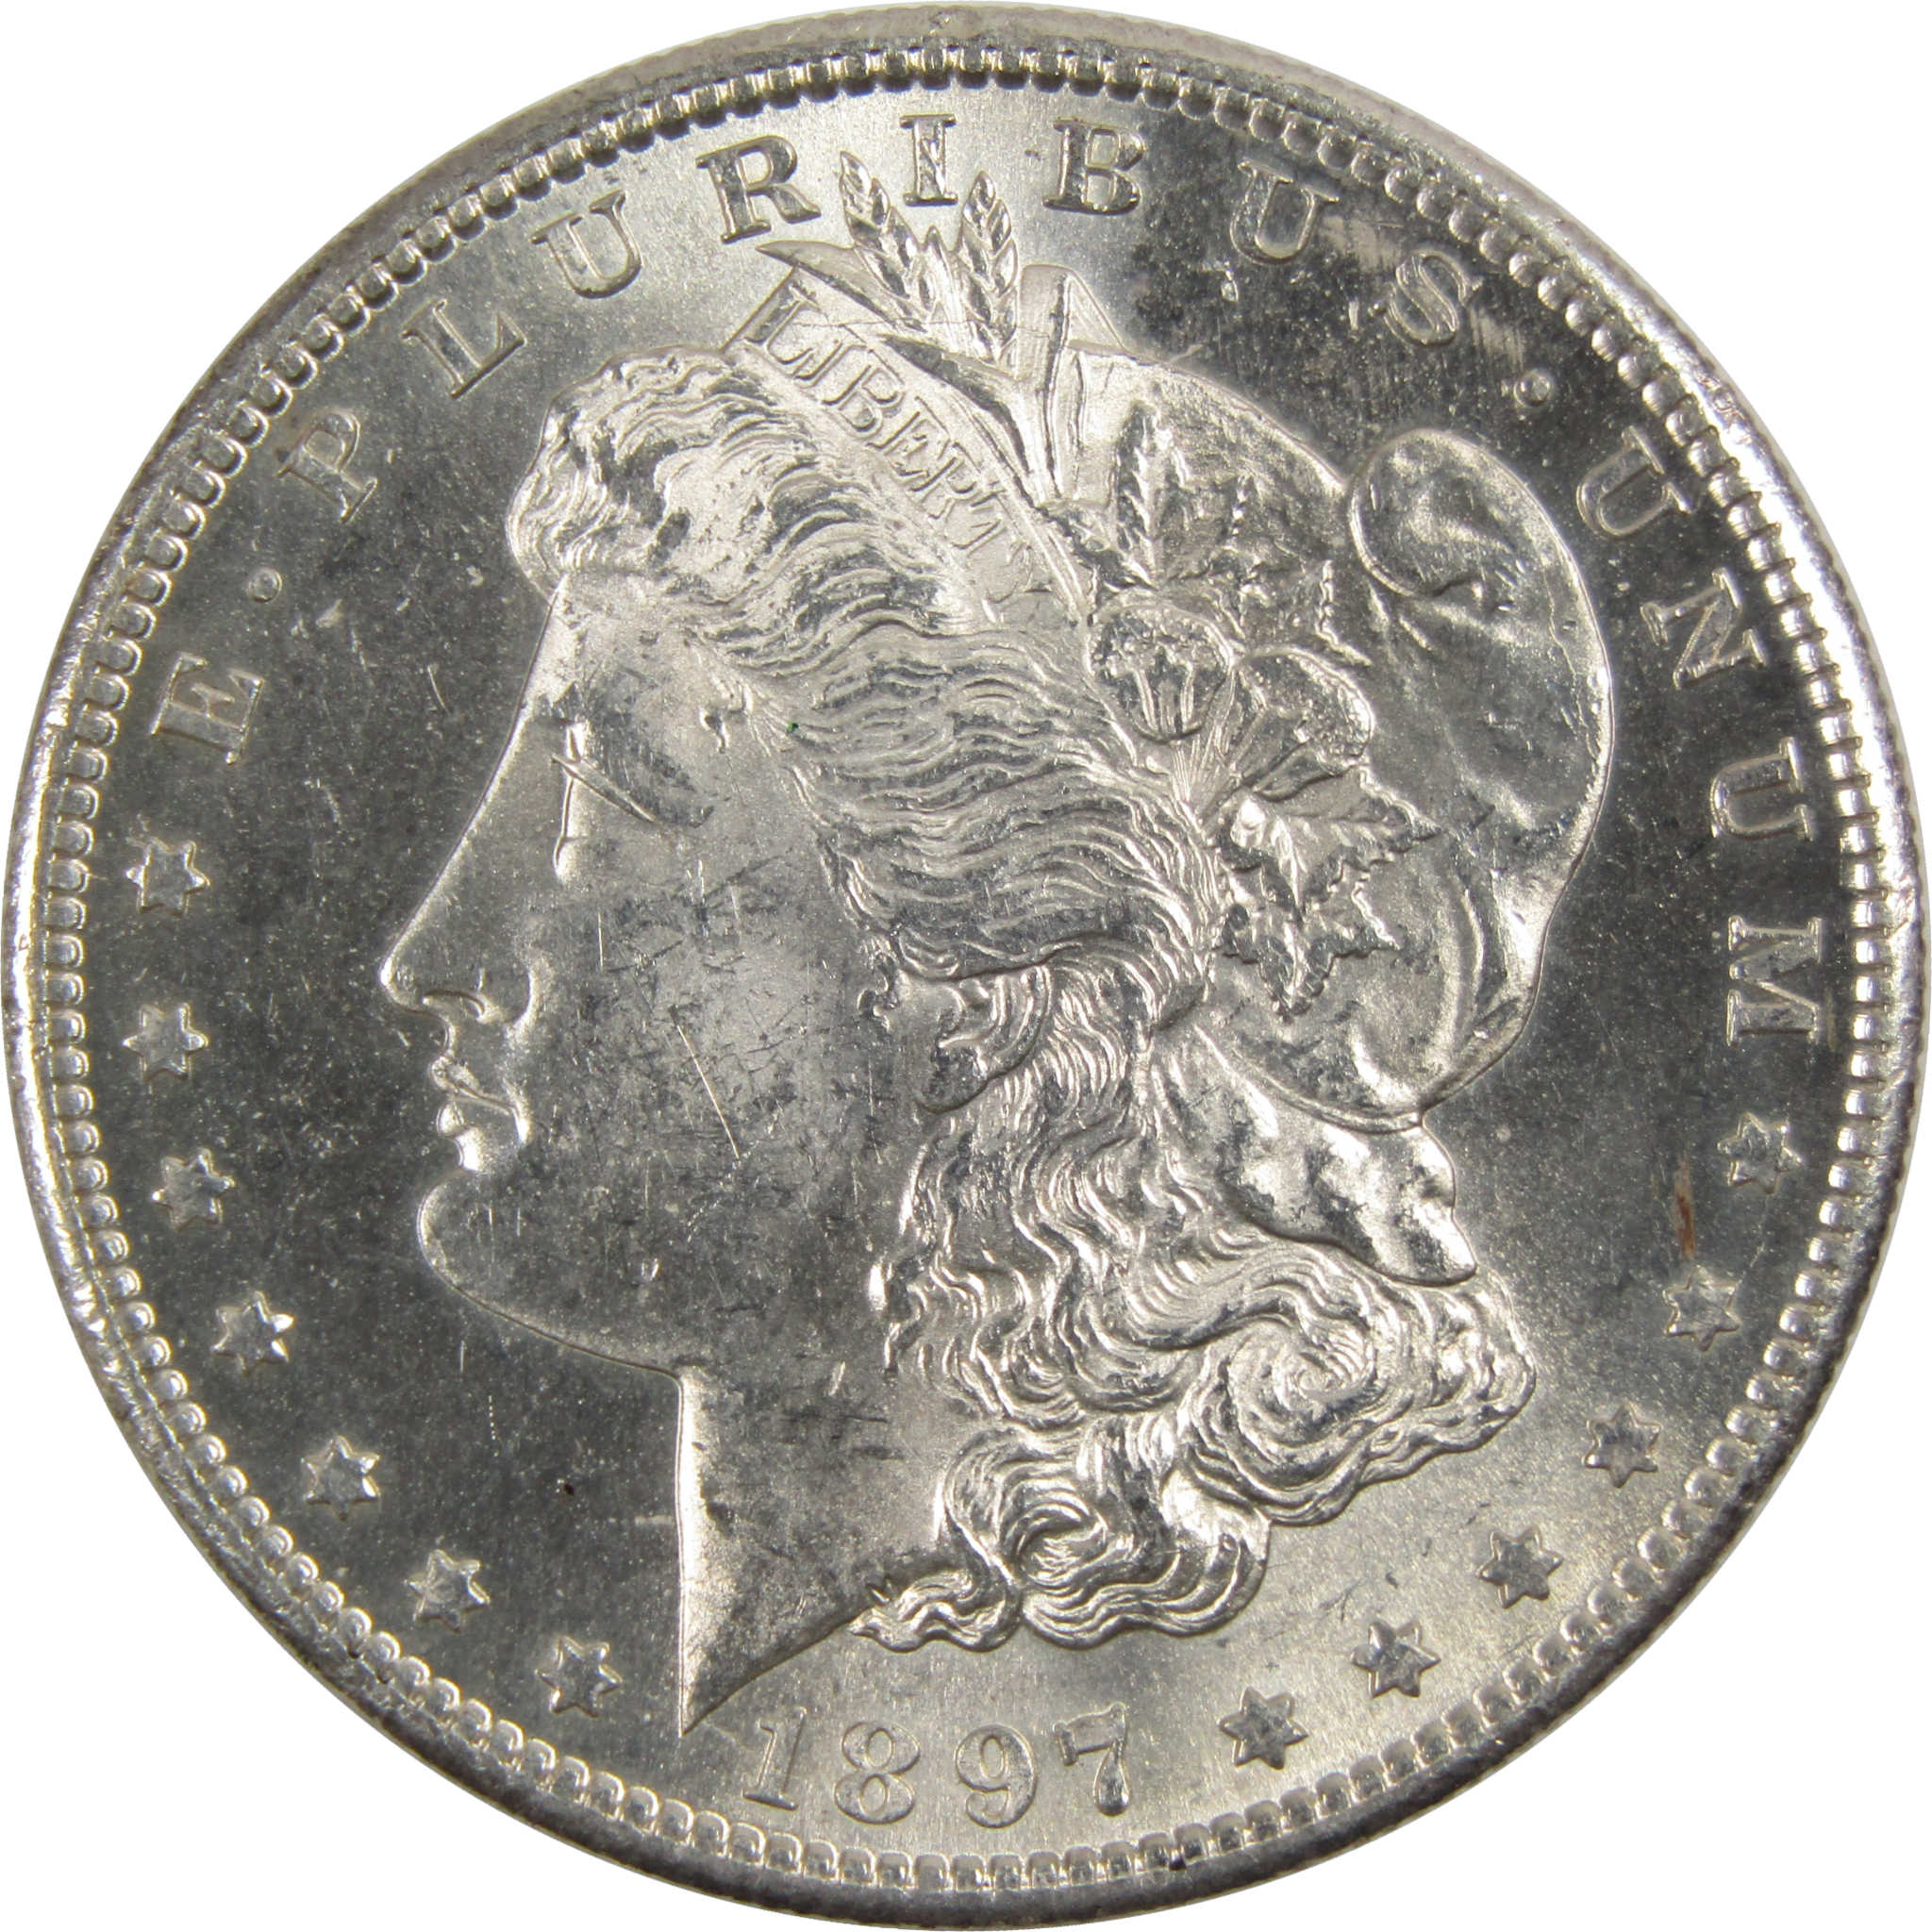 1897 S Morgan Dollar BU Choice Uncirculated 90% Silver $1 Coin SKU:I8124 - Morgan coin - Morgan silver dollar - Morgan silver dollar for sale - Profile Coins &amp; Collectibles